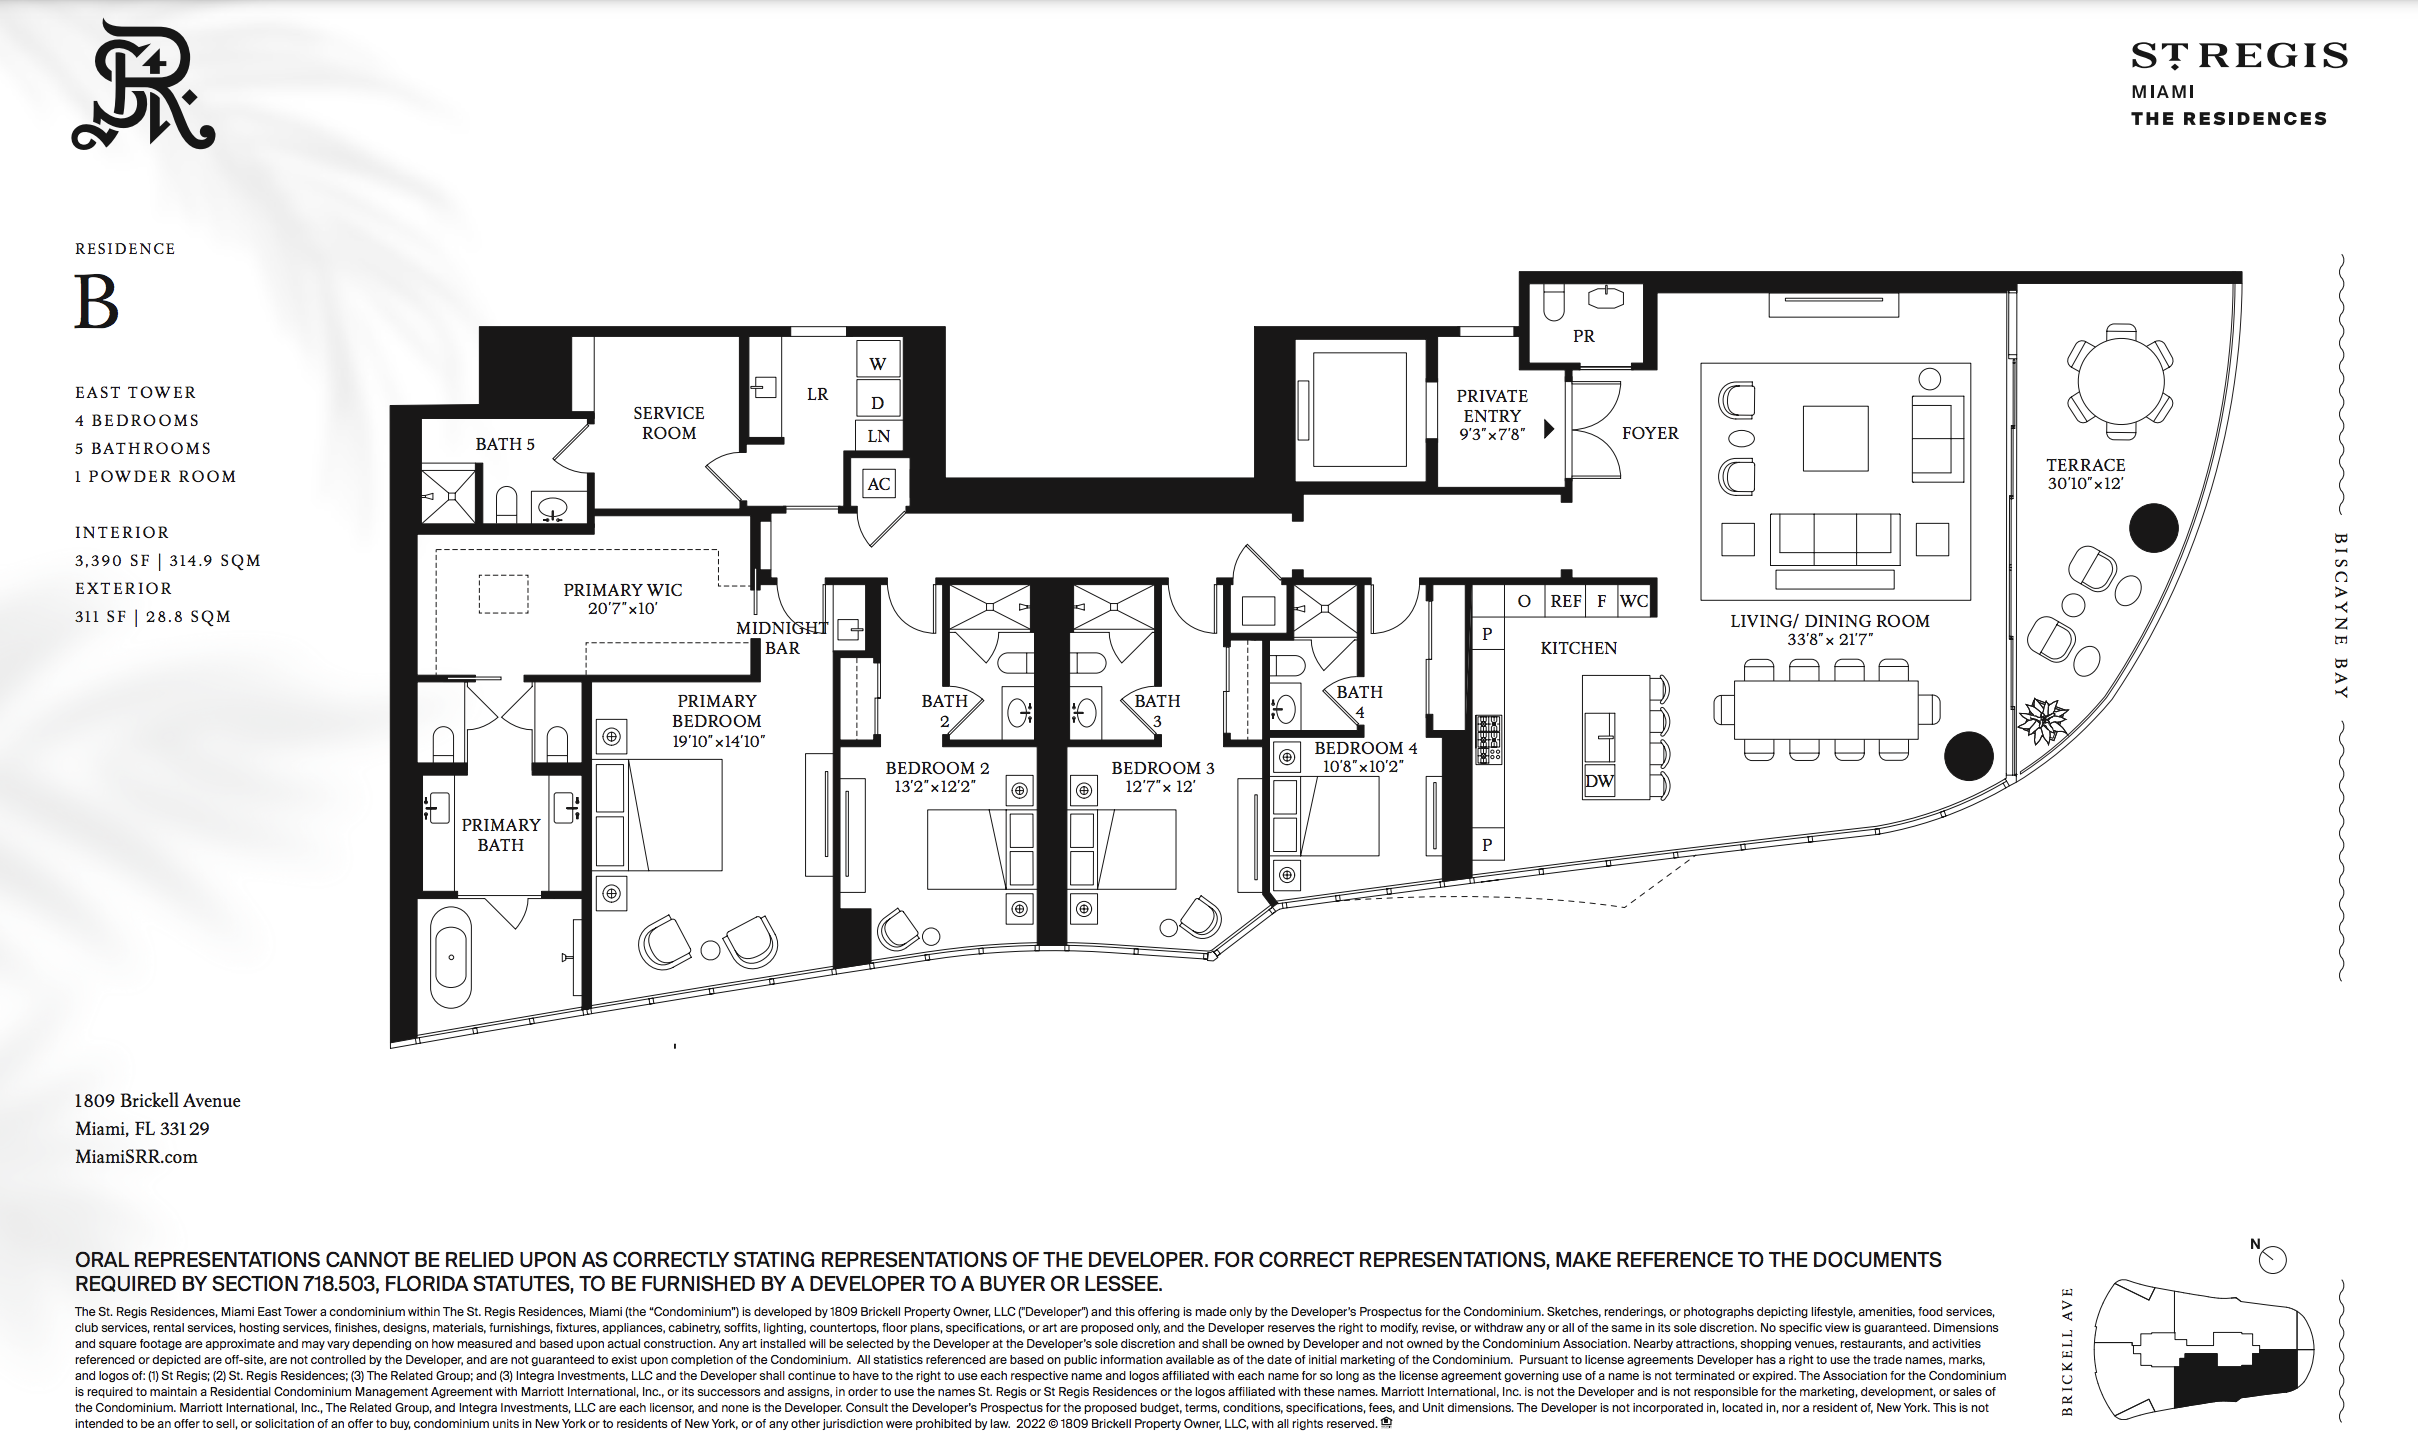 St Regis Brickell The B-Line. 4 Bedrooms | 5.5 Bathrooms 3,390 Interior SF | 311 SF Exterior